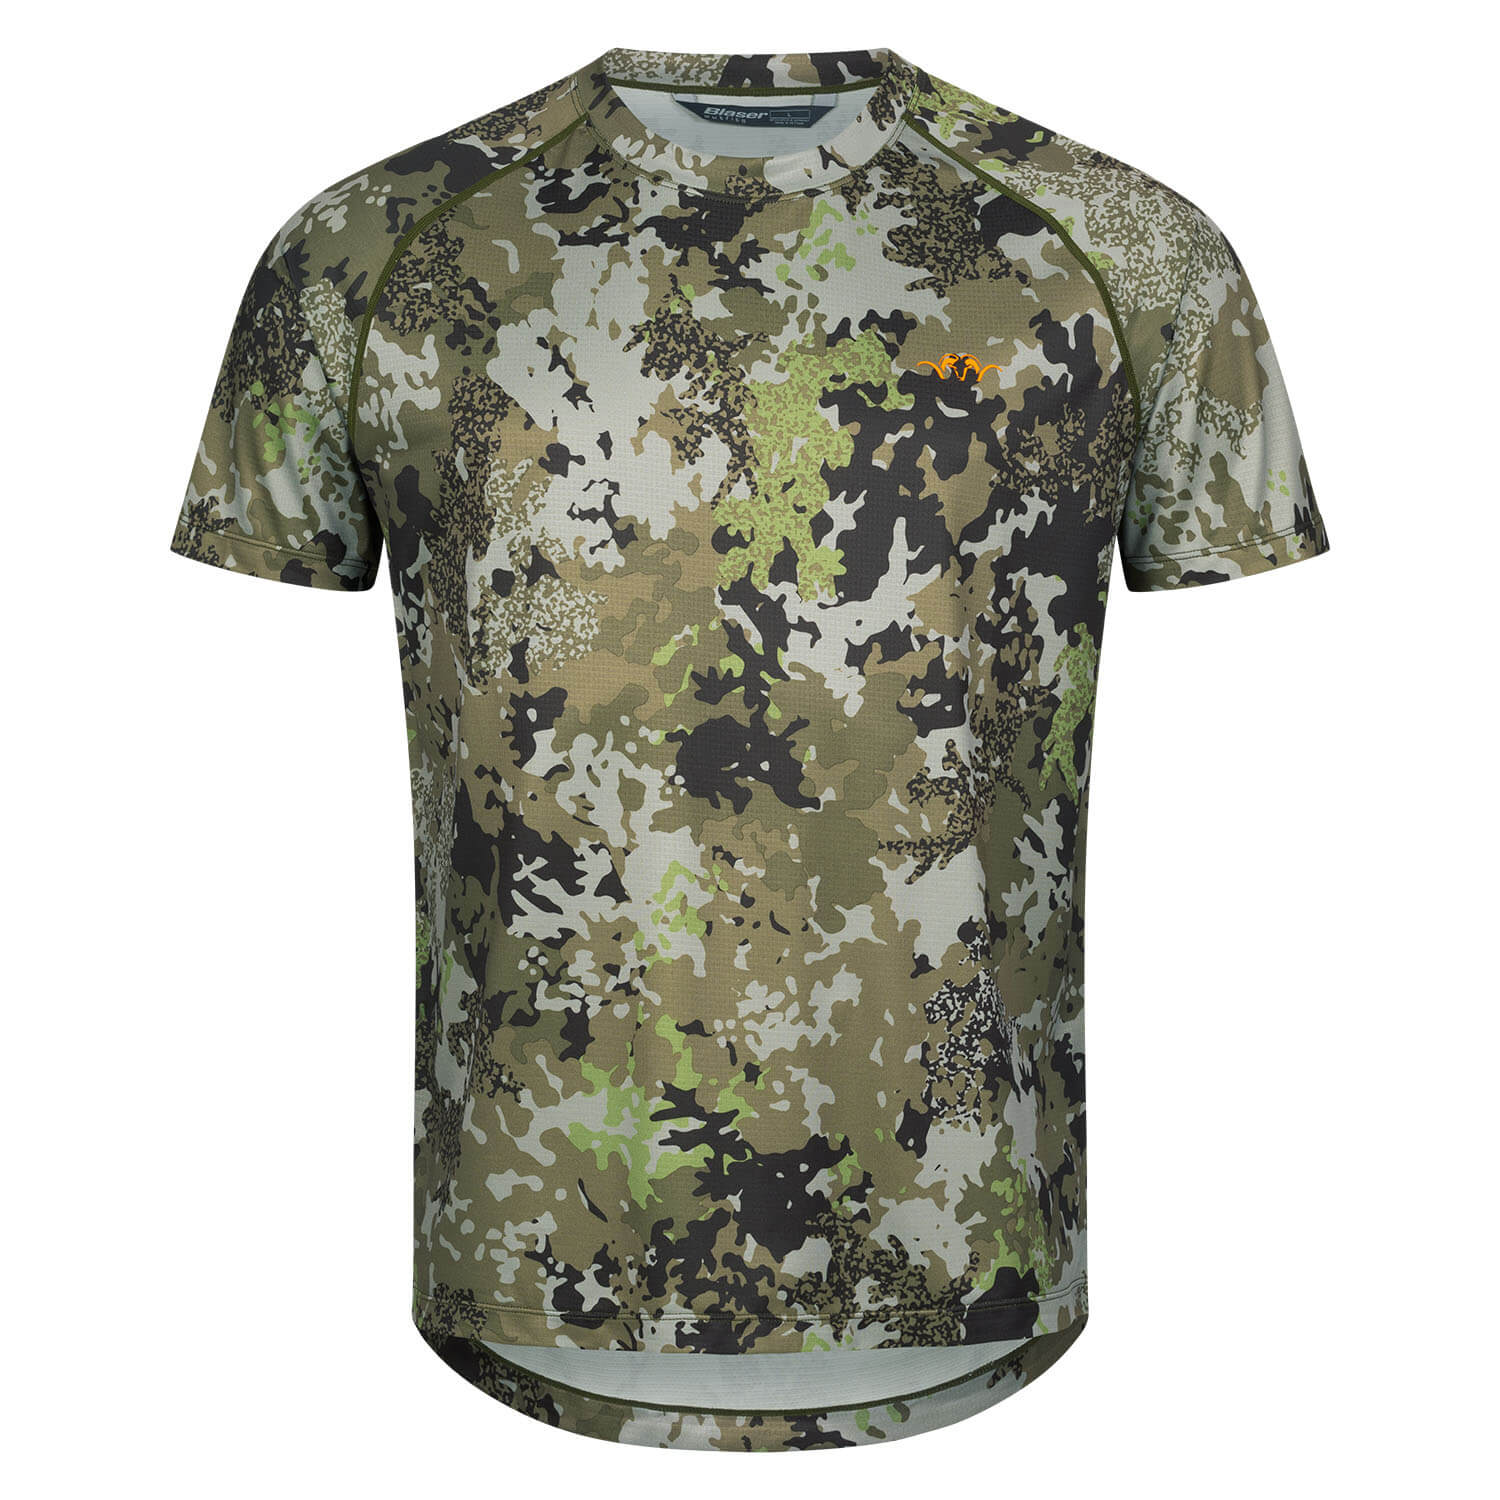  Blaser HunTec Tech 23 T-shirt (Camo) - Camouflageshirts